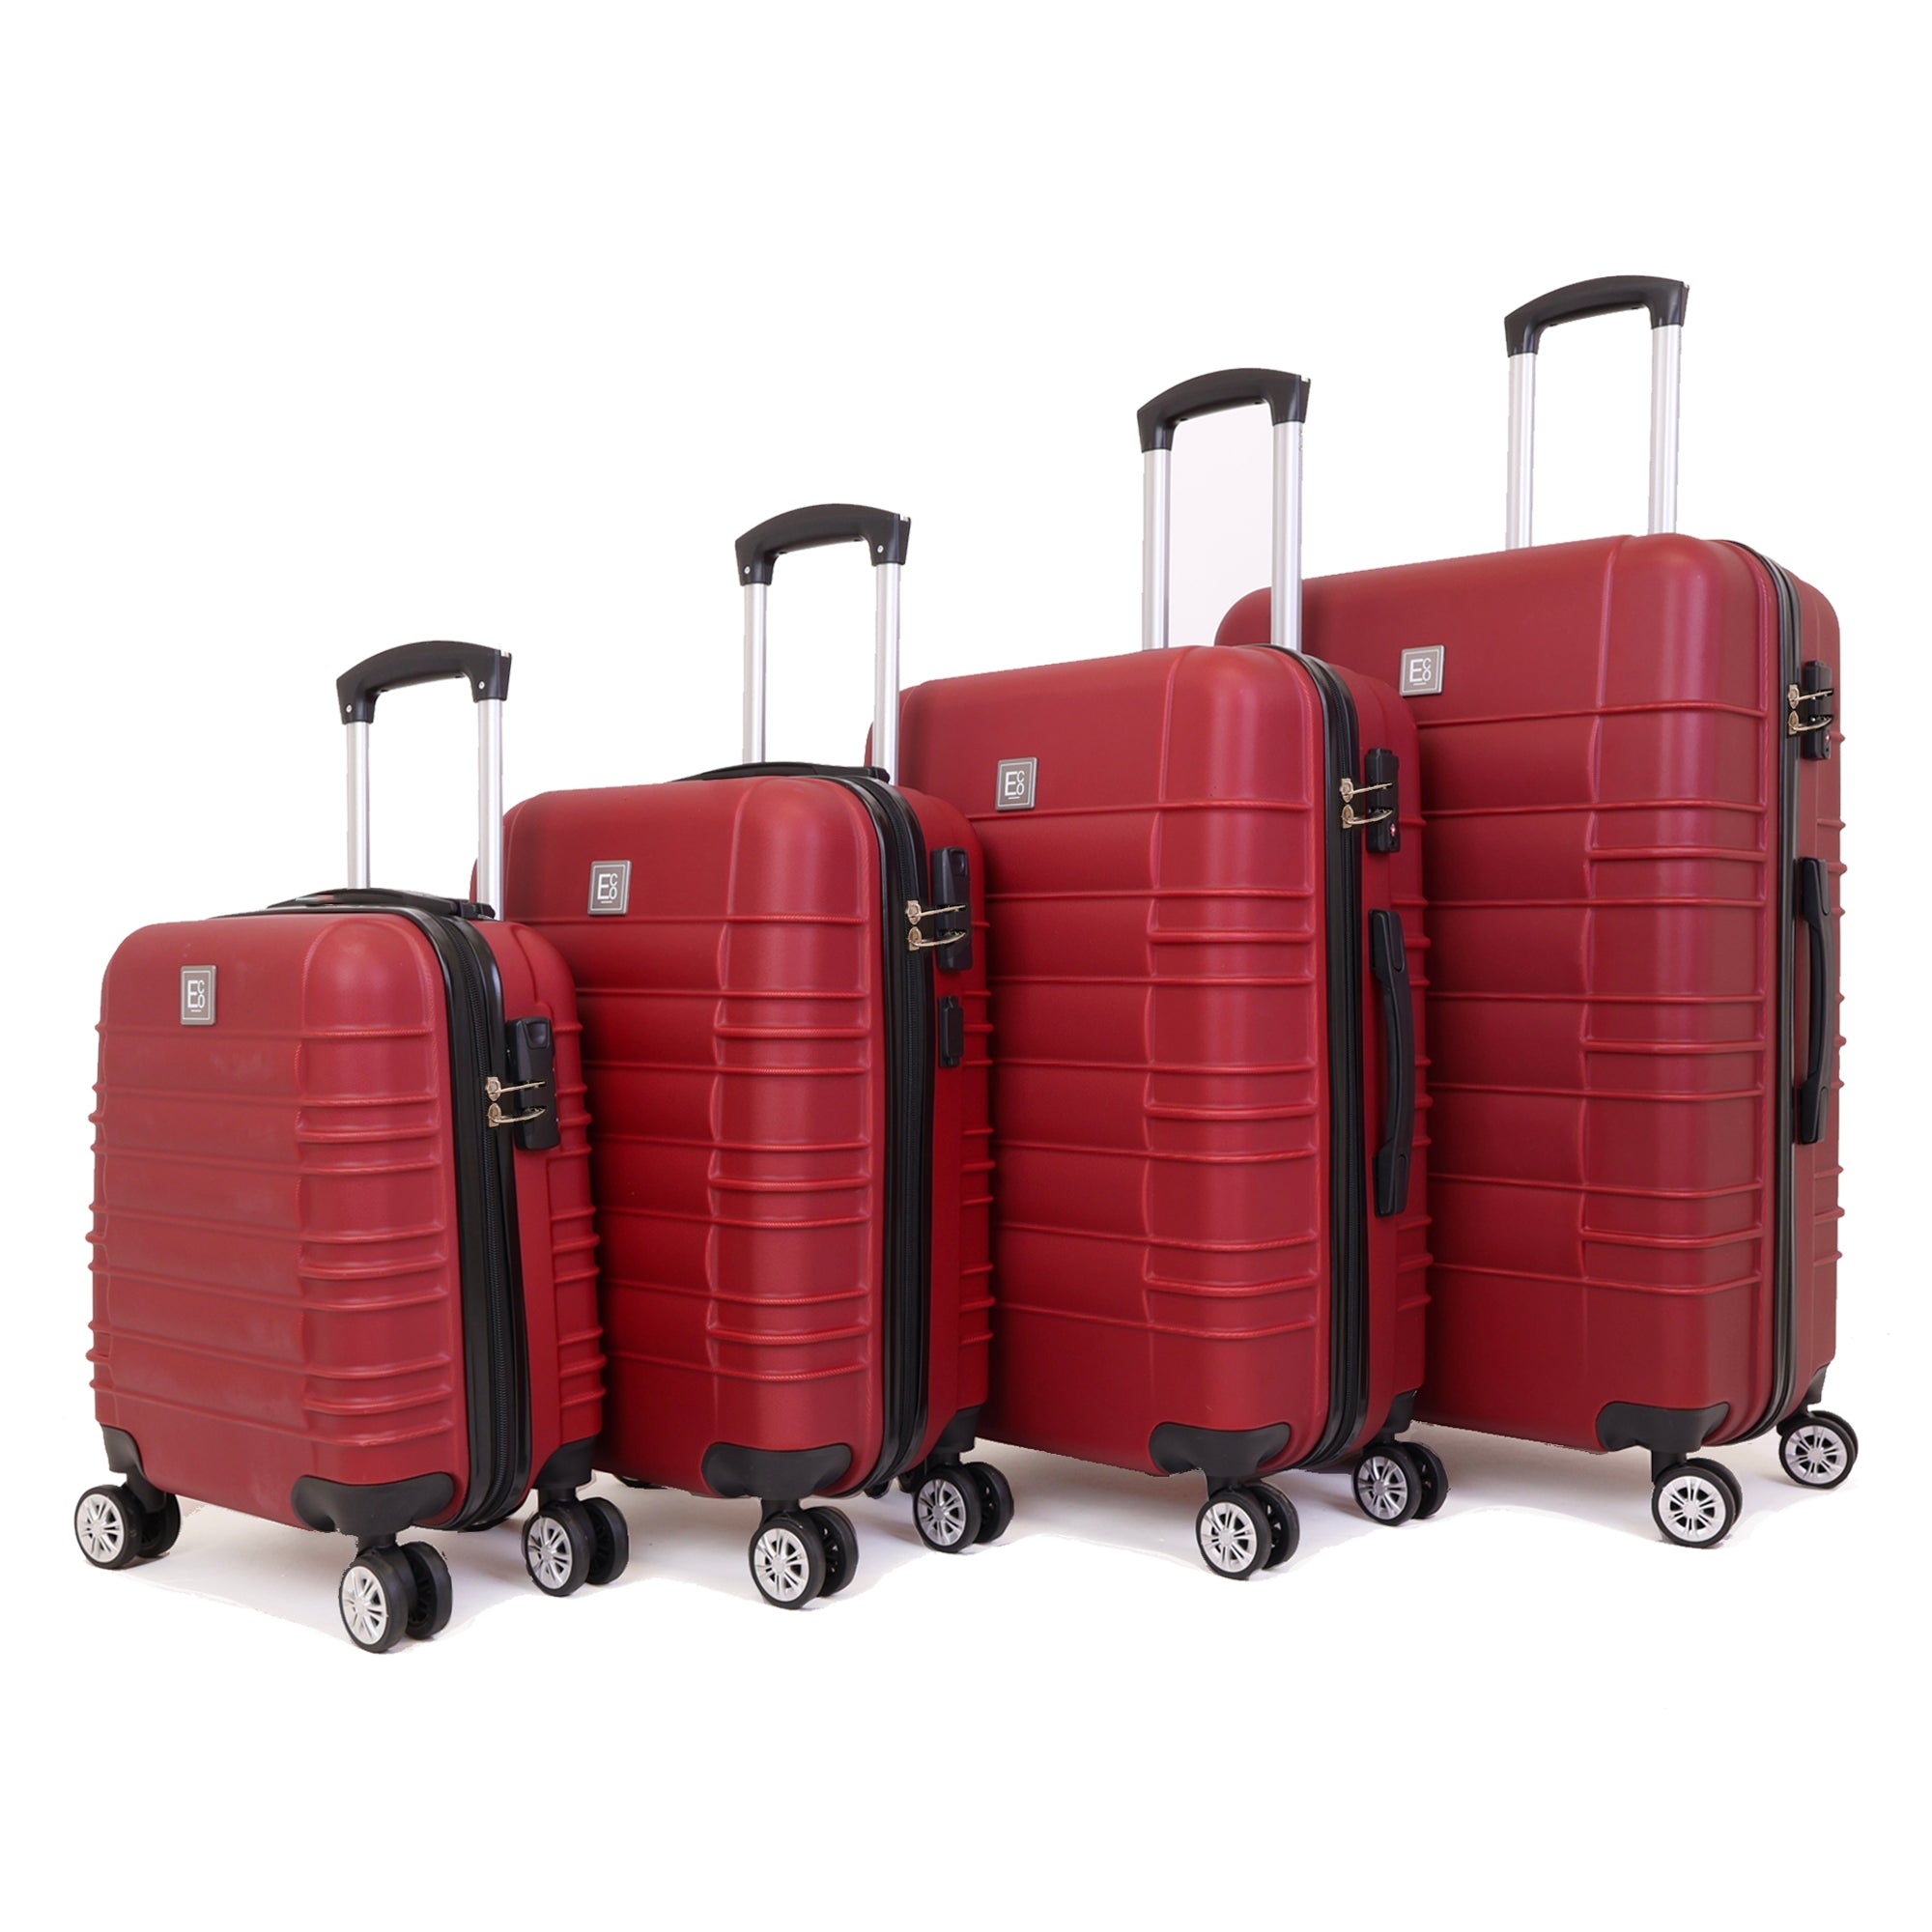 Juego de equipaje rígido Santorini - Ruedas giratorias 360 - 4 piezas - Rojo